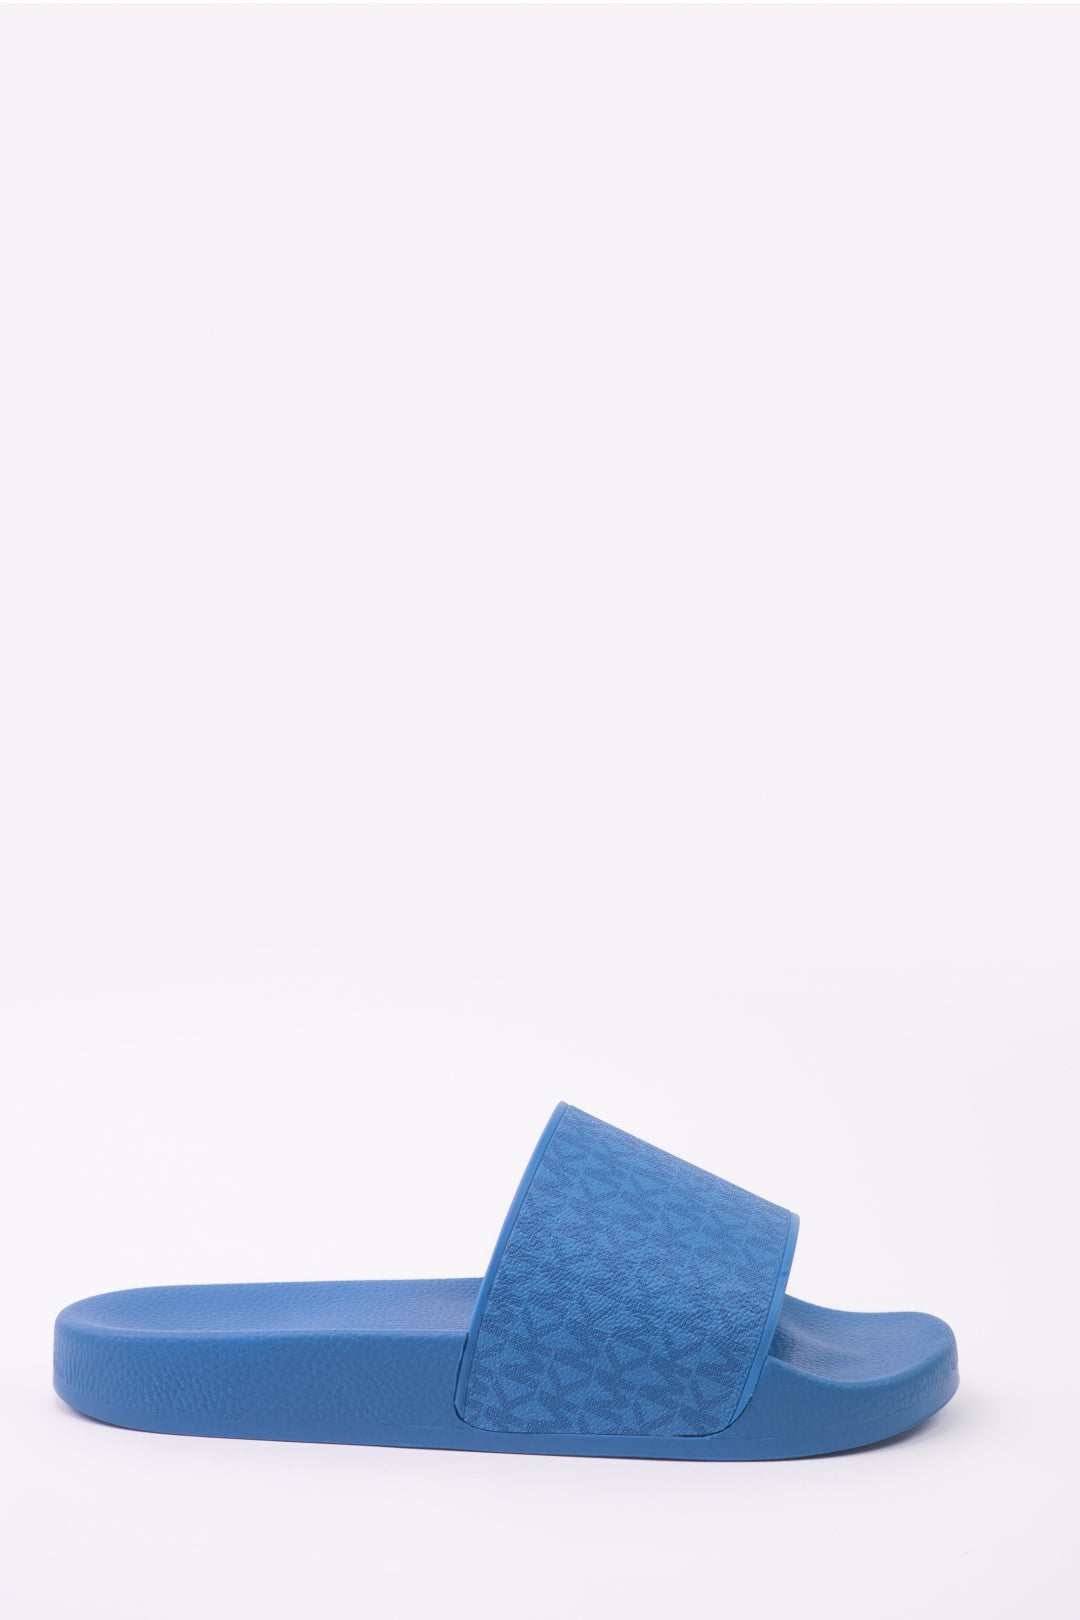 Sandal Jake Slide Michael Kors color Blue